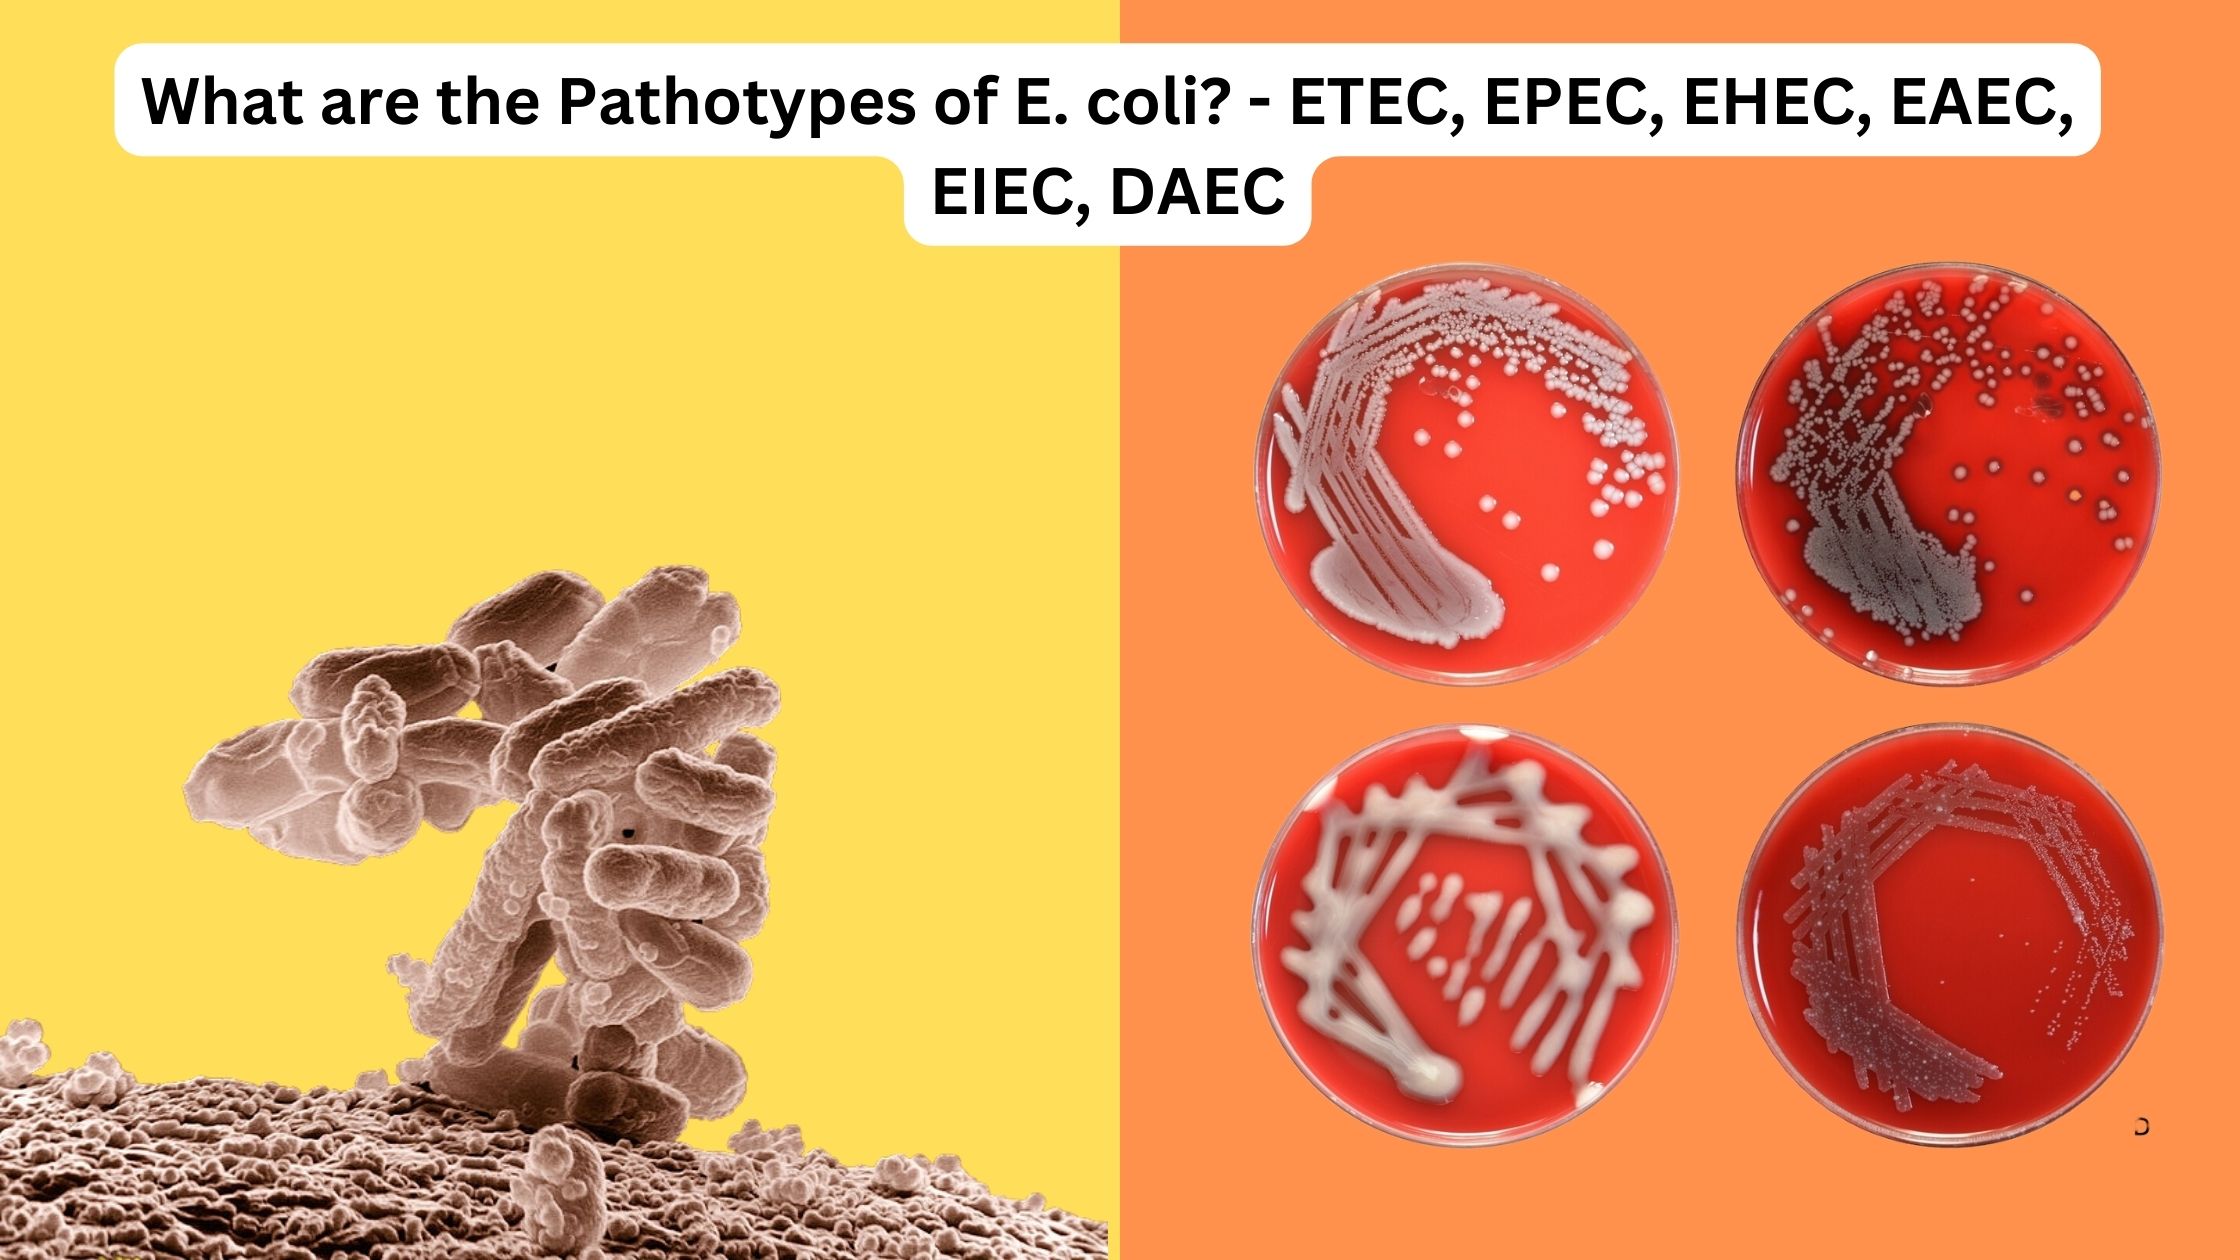 What are the Pathotypes of E. coli? - ETEC, EPEC, EHEC, EAEC, EIEC, DAEC